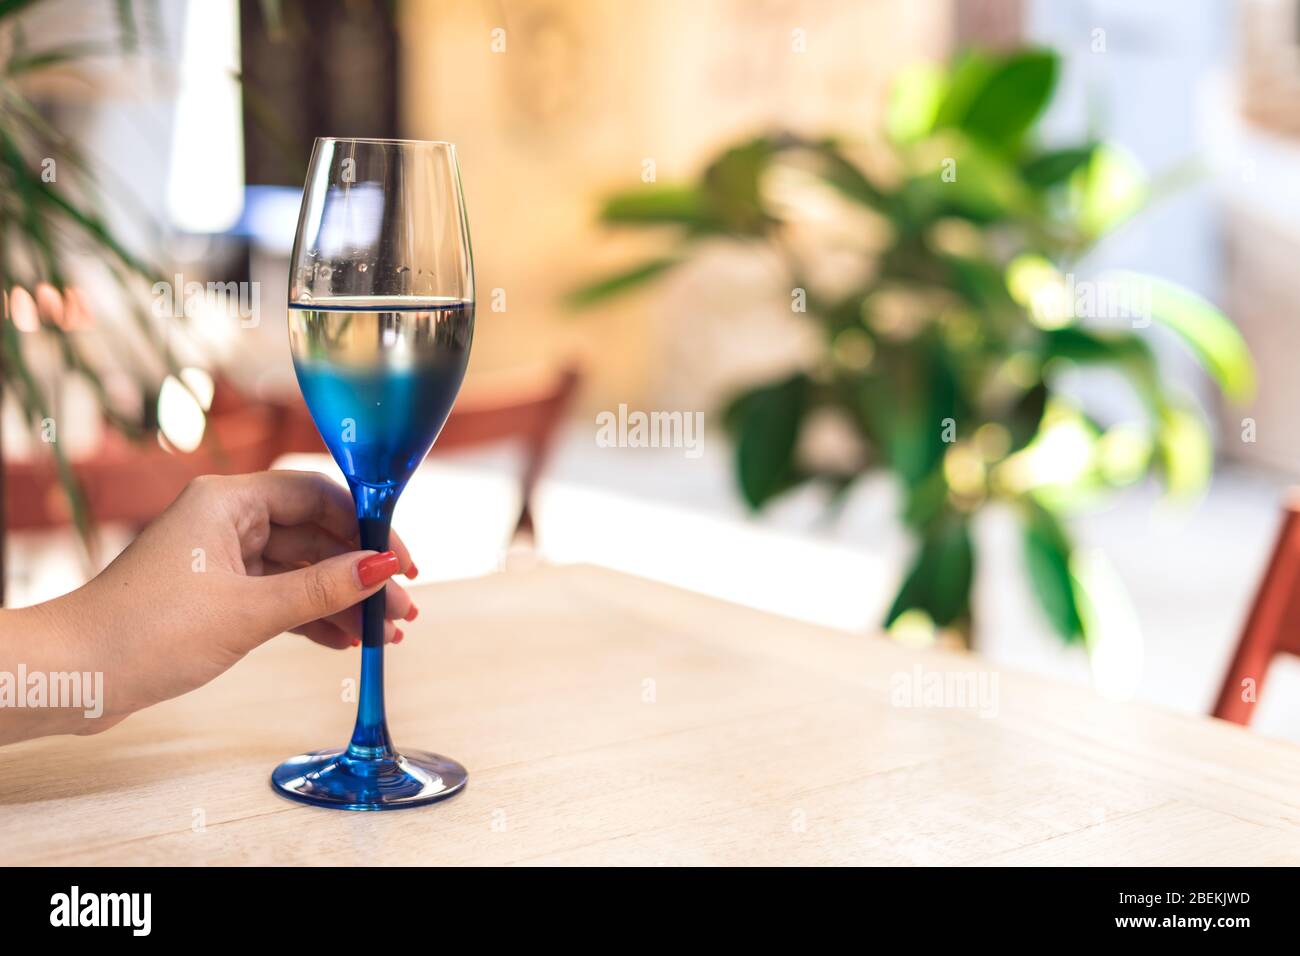 https://c8.alamy.com/comp/2BEKJWD/female-hand-holding-a-glass-of-white-wine-female-hand-with-red-manicure-2BEKJWD.jpg